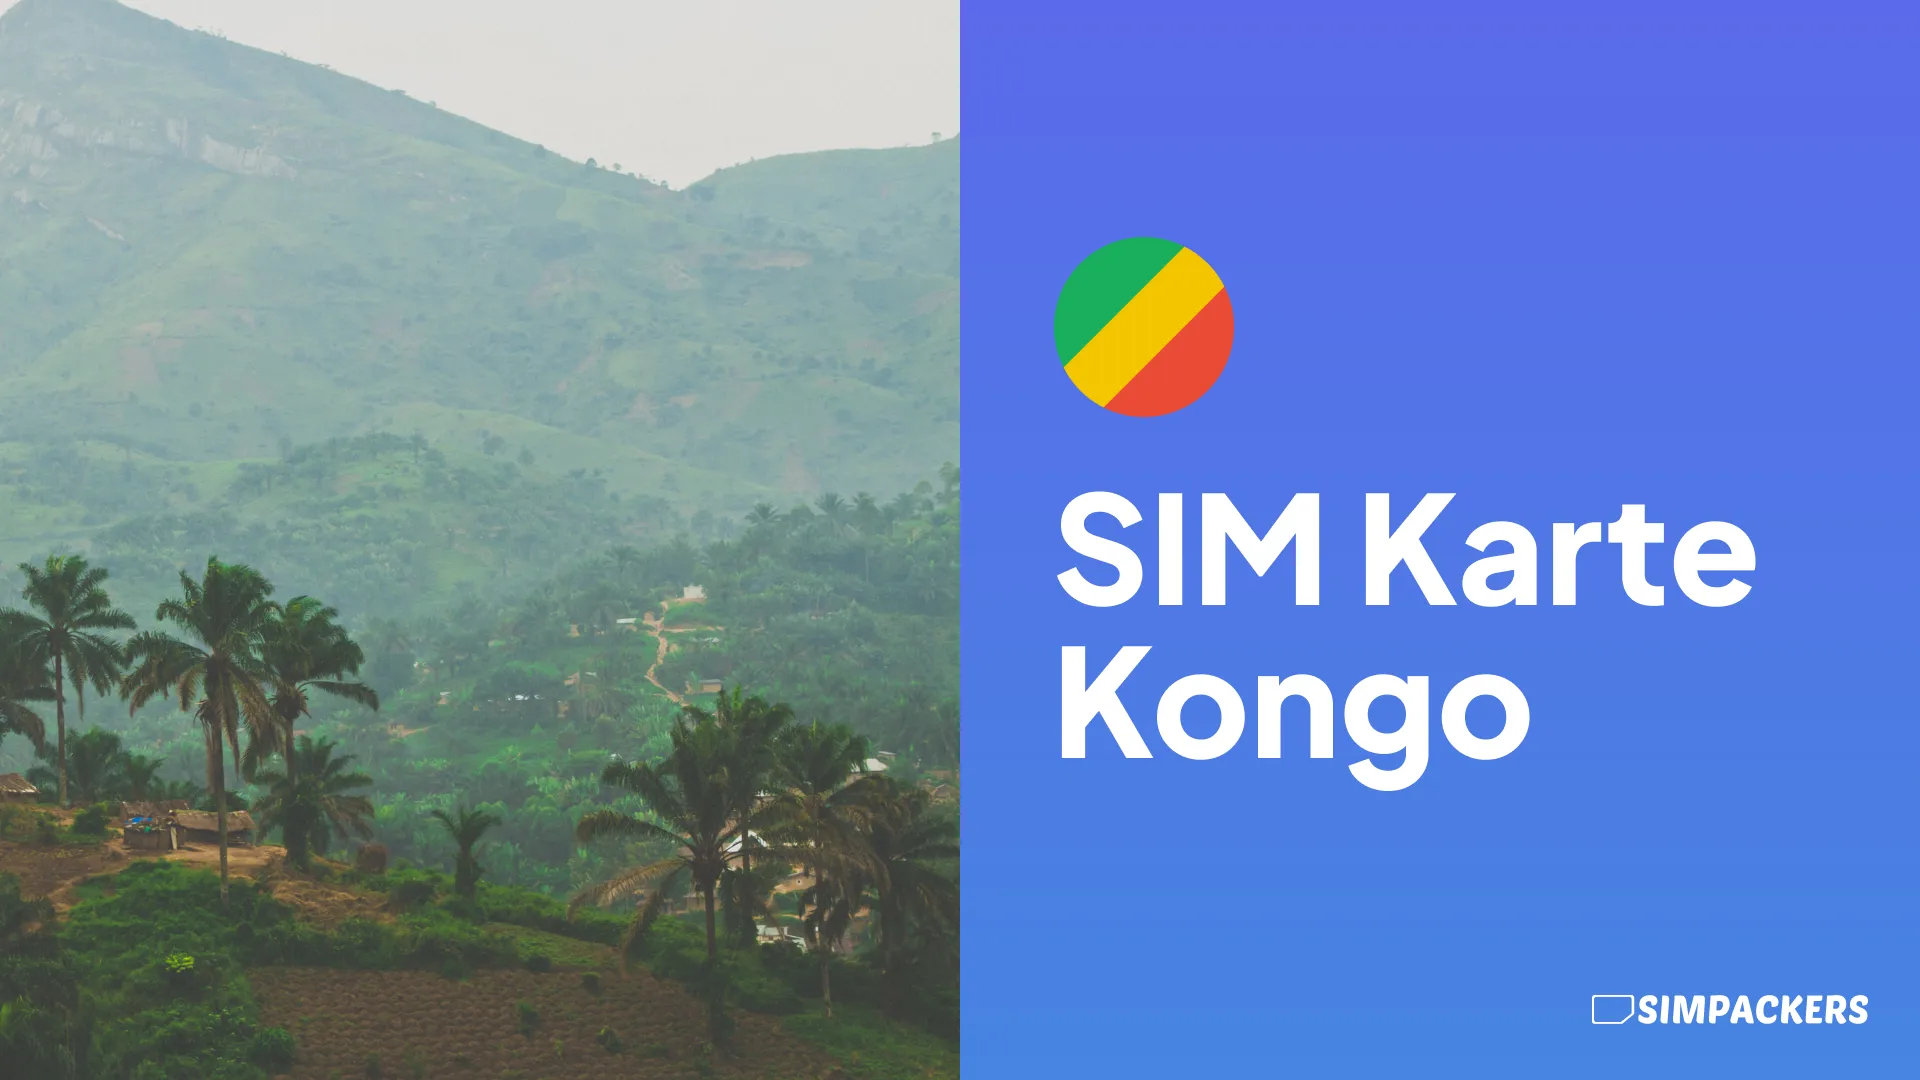 DE/FEATURED_IMAGES/sim-karte-kongo.webp